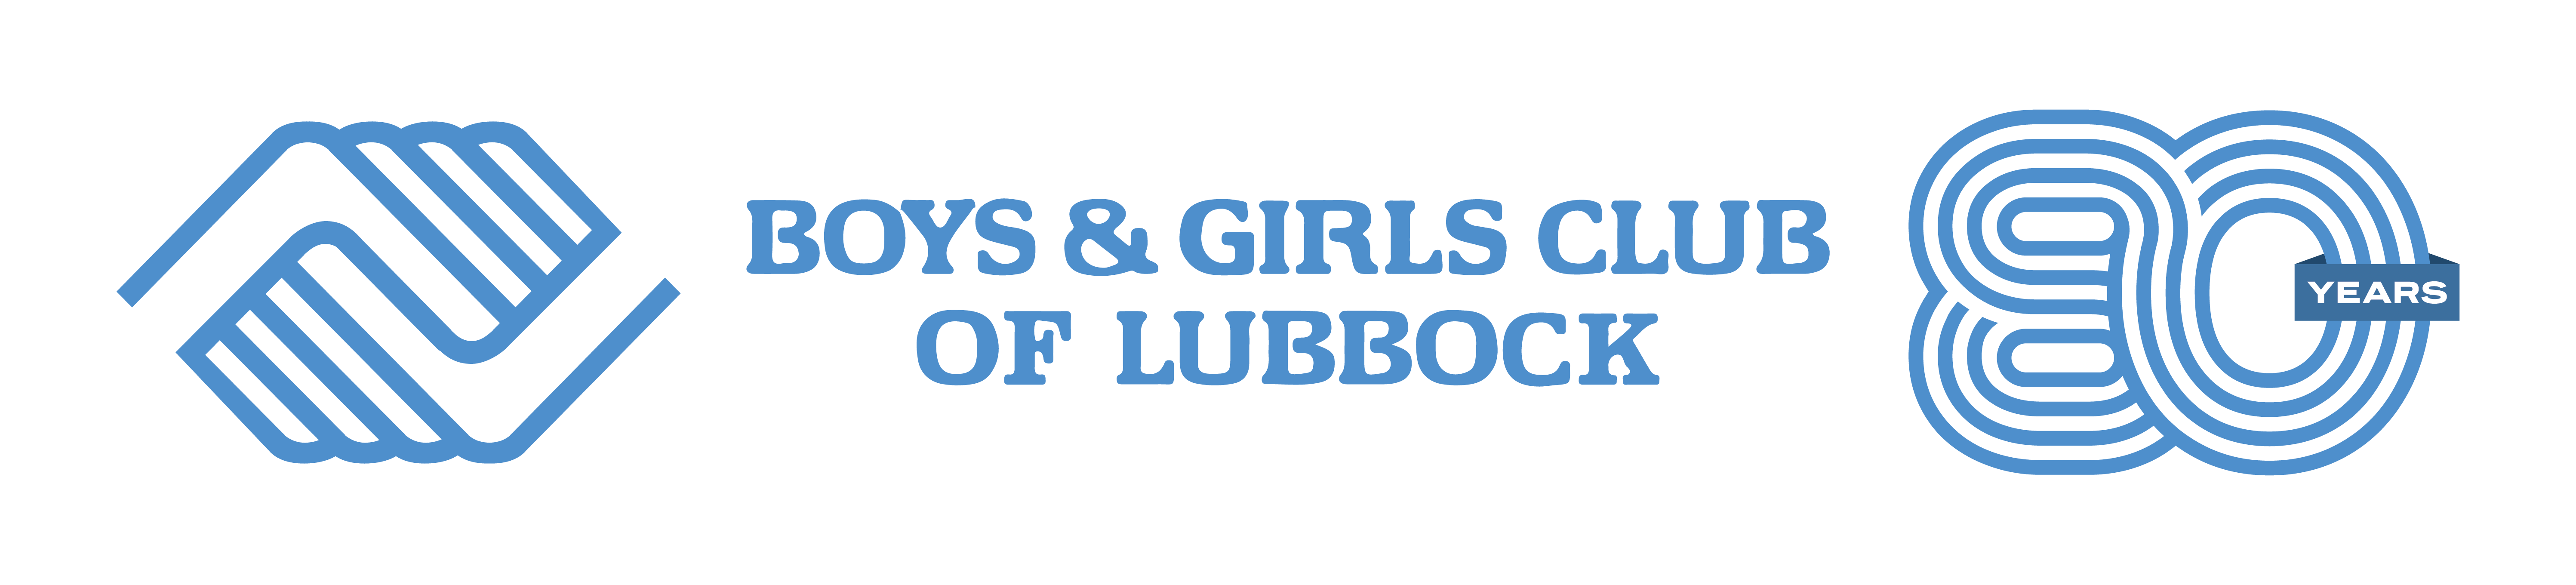 Boys & Girls Club Outback Event